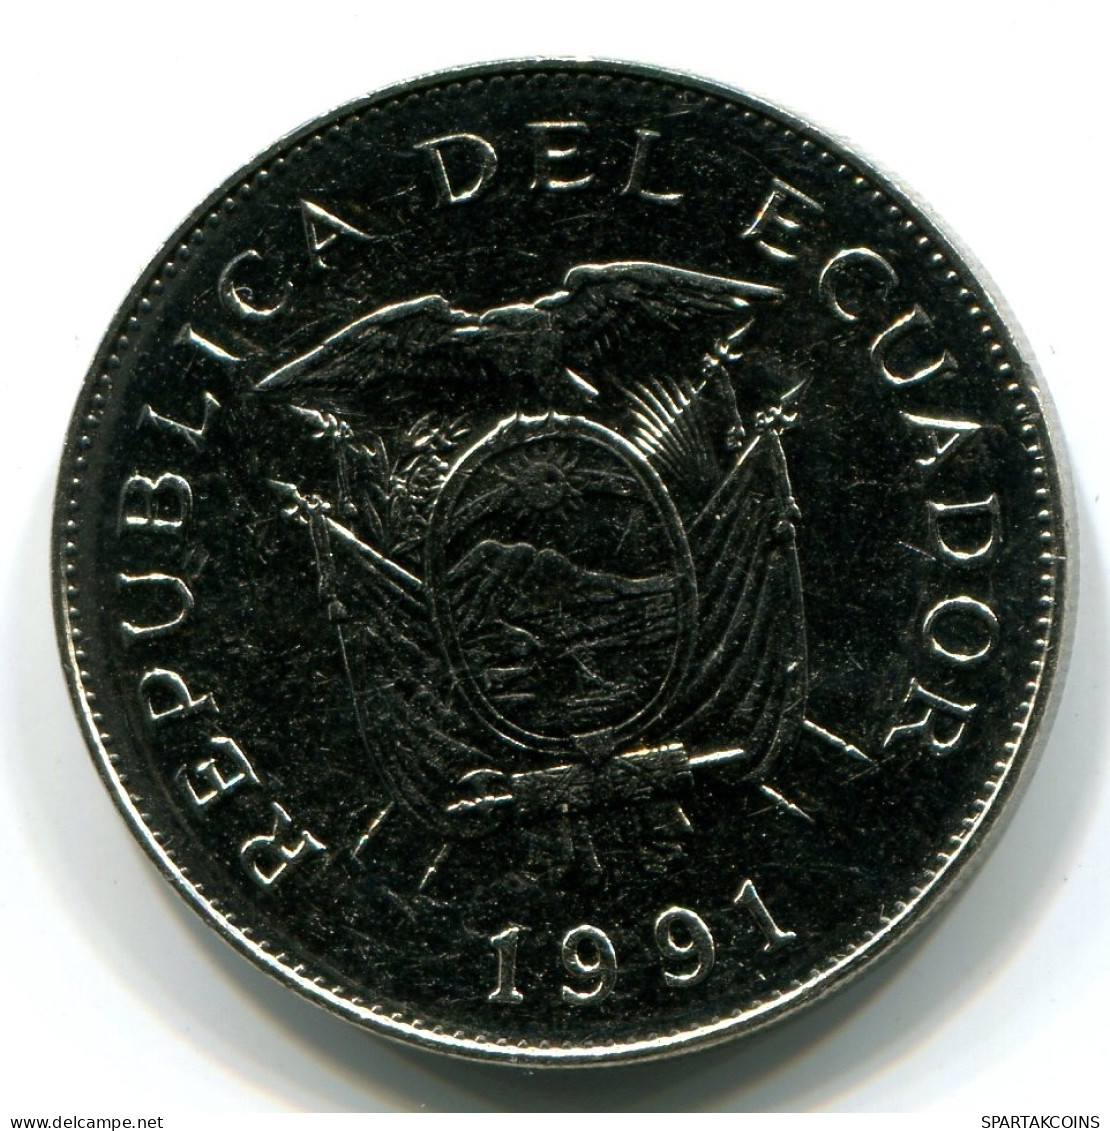 50 SUCRE 1991 ECUADOR UNC Coin #W11019.U - Equateur